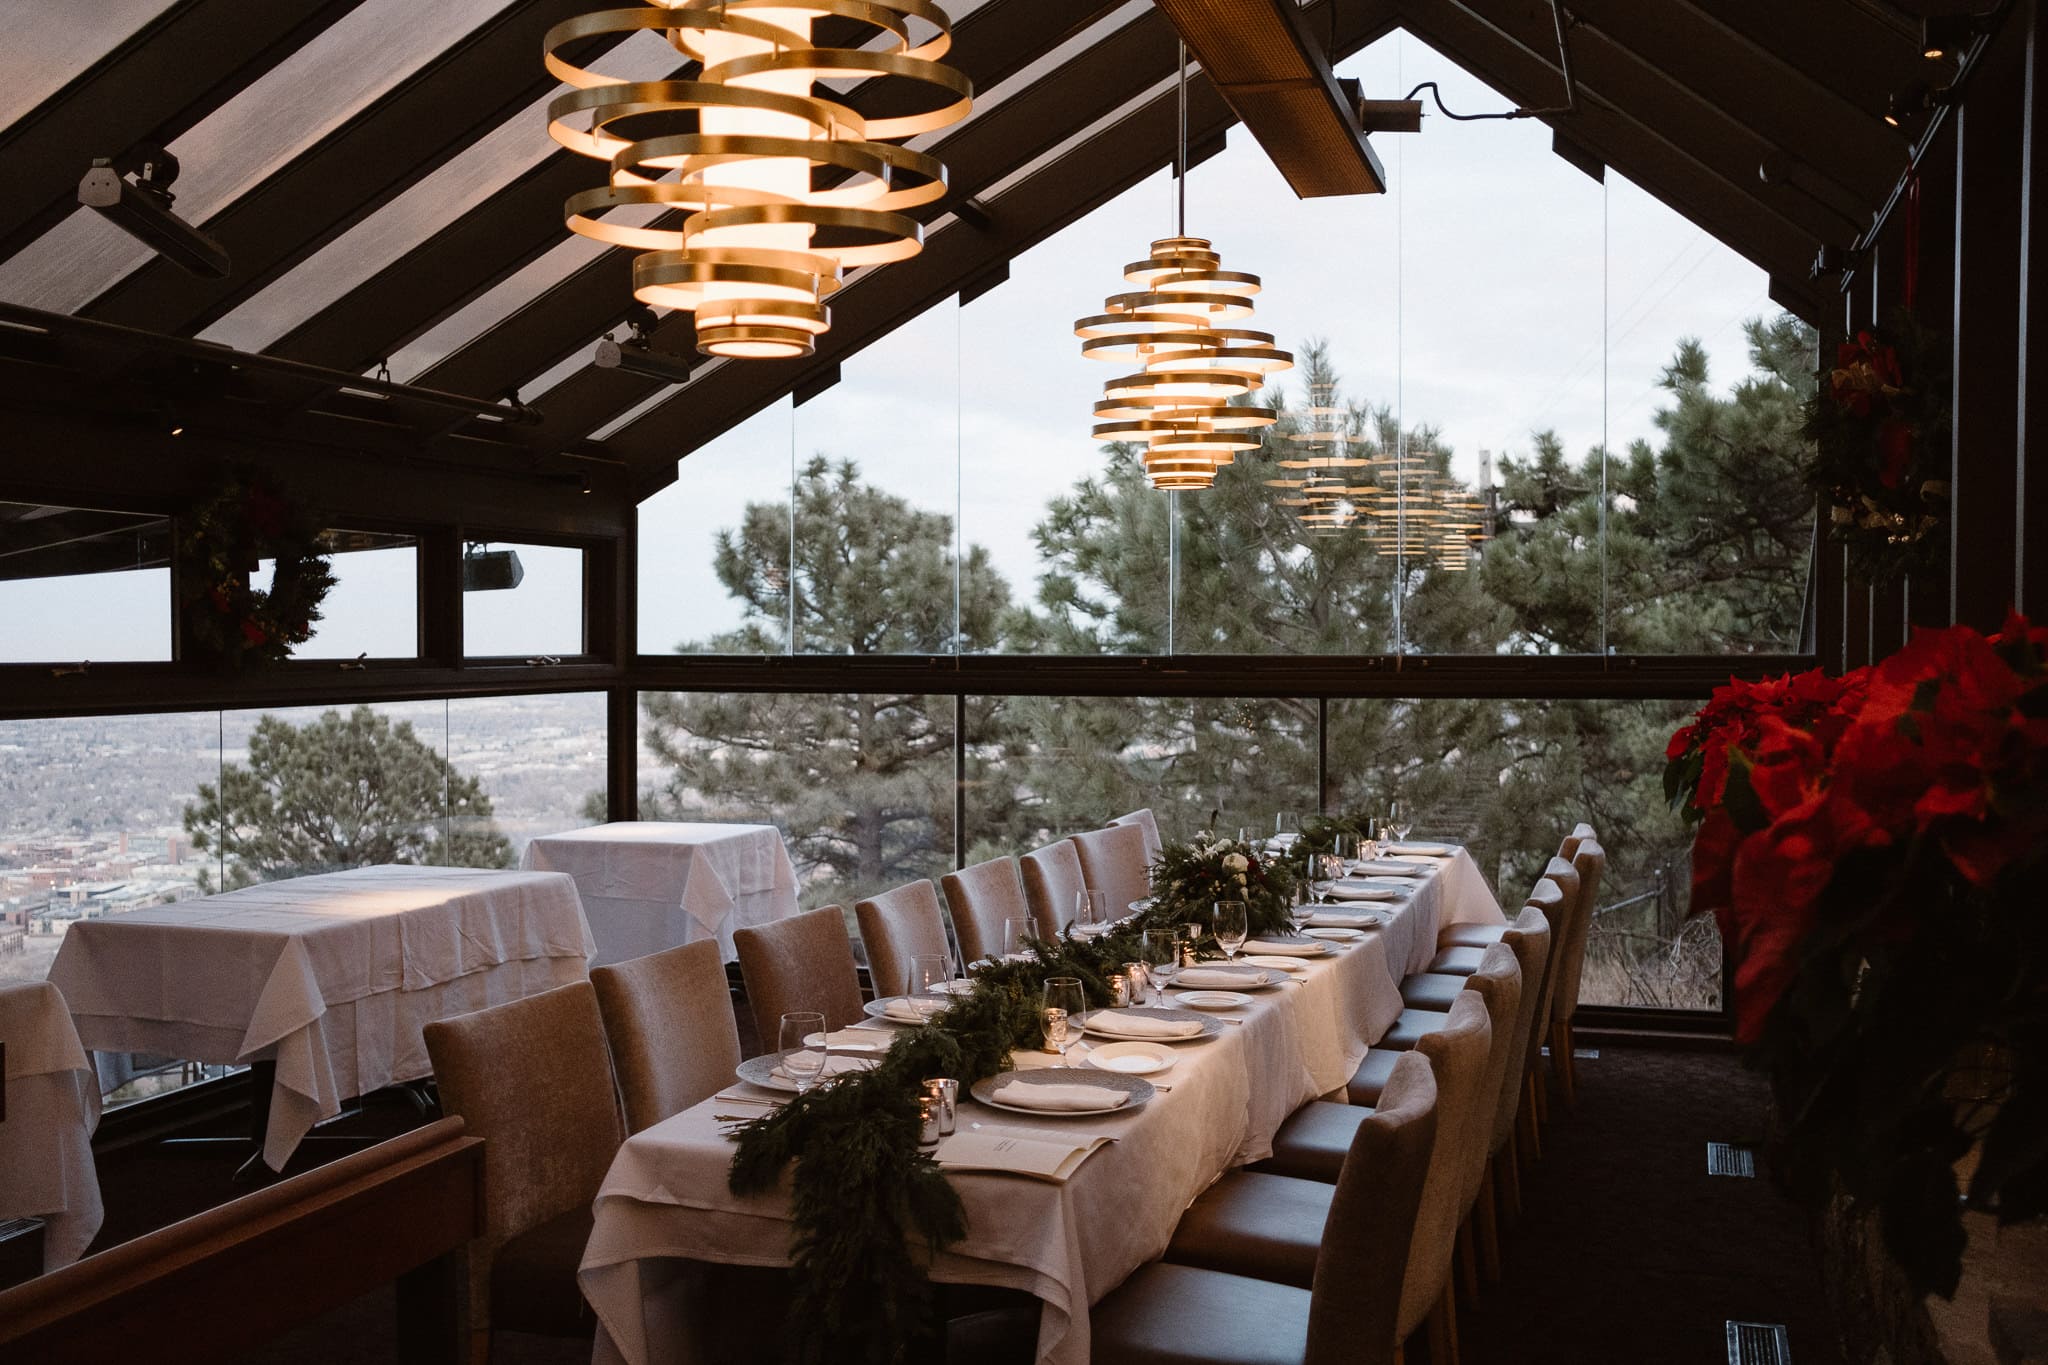 Flagstaff House wedding reception, Boulder intimate wedding, Christmas themed wedding reception decor